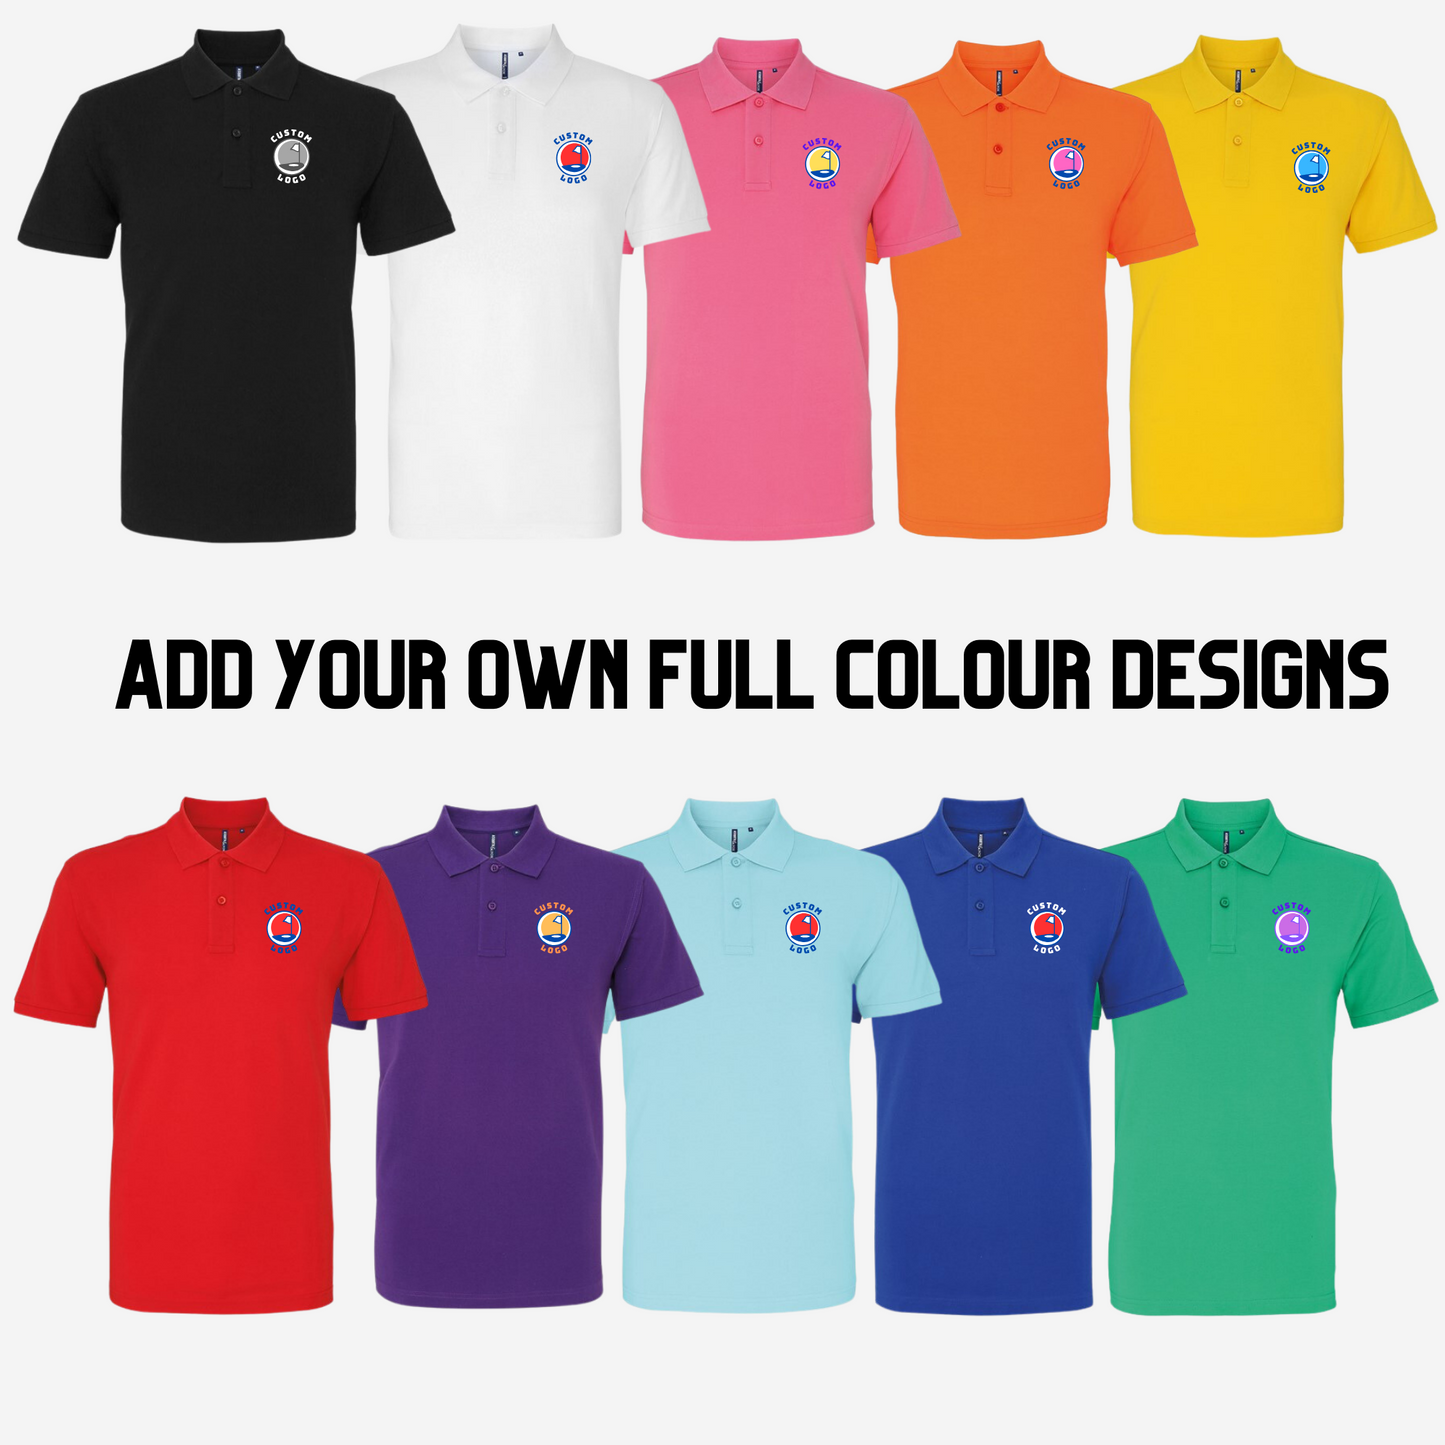 Customised Golf Society Polo Shirts